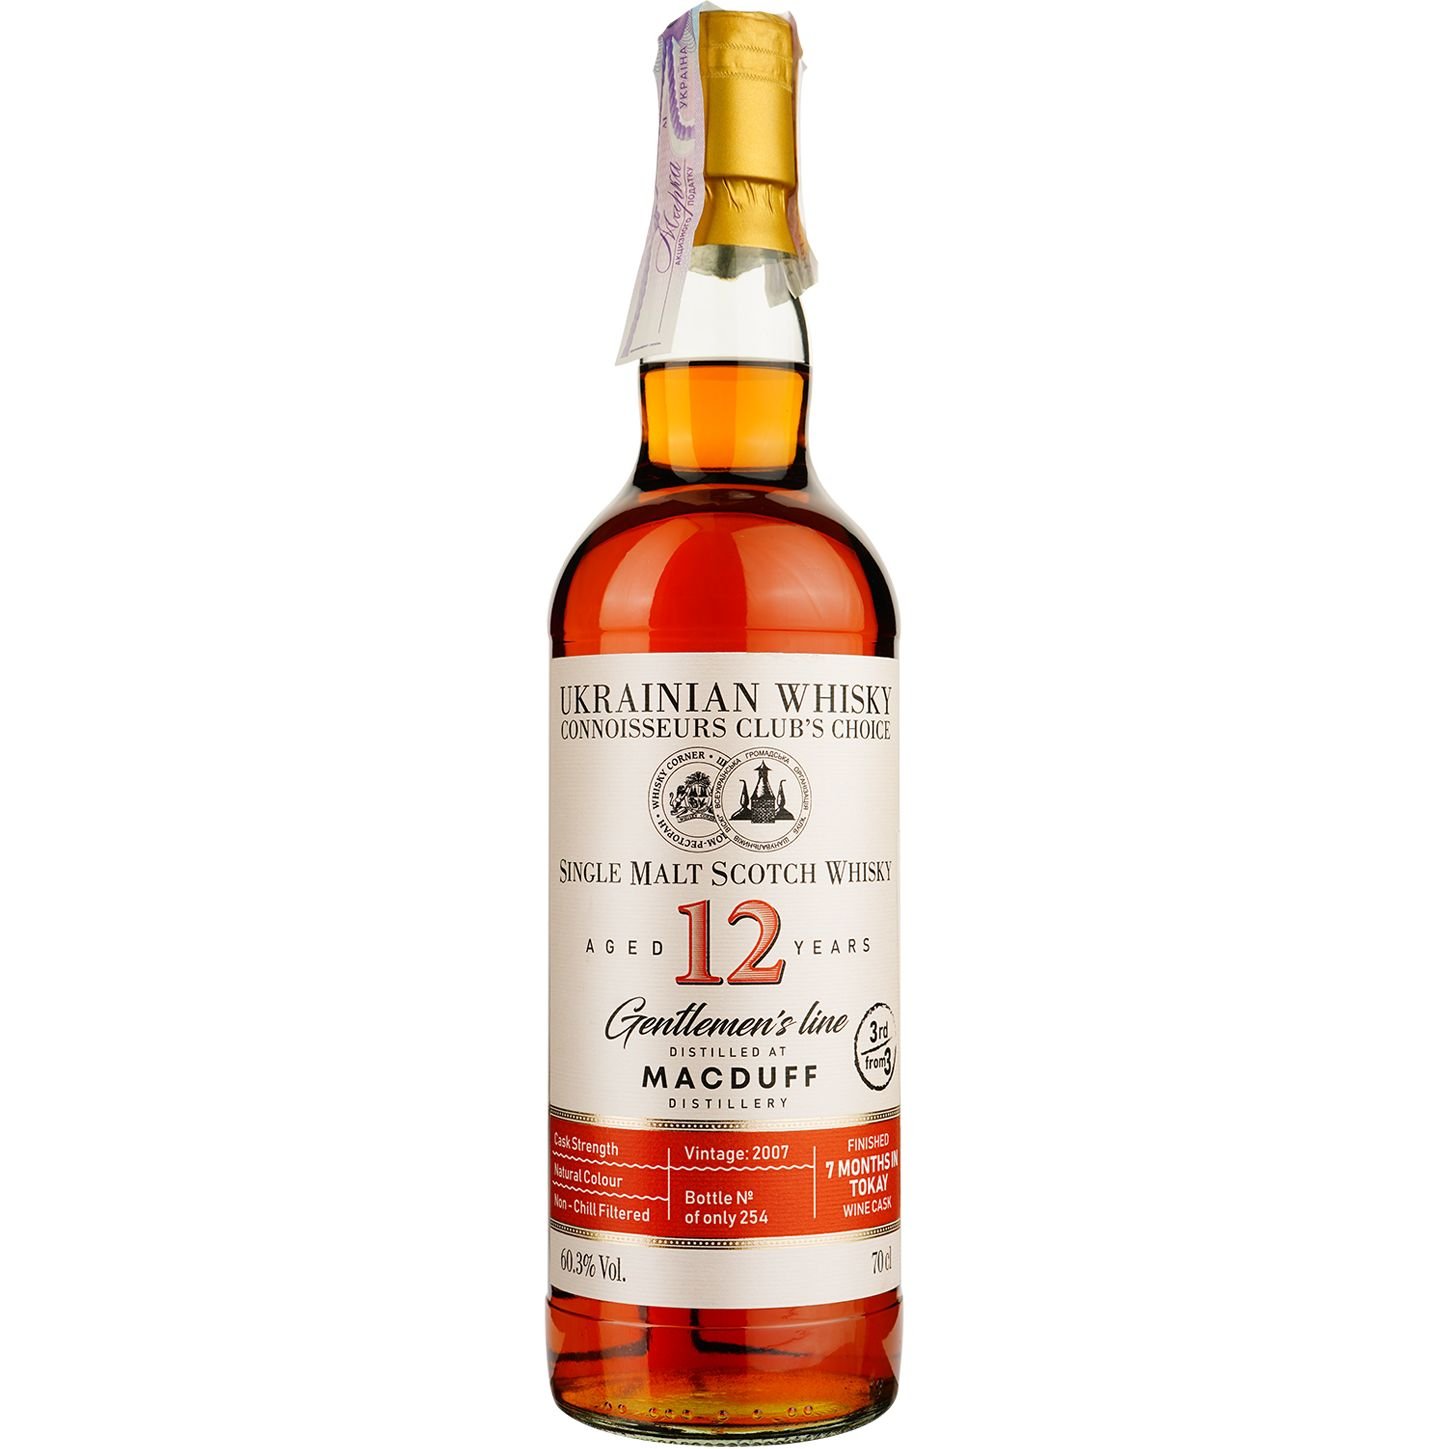 Виски Macduff 12 Years Old Tokay Single Malt Scotch Whisky, в подарочной упаковке, 60,3%, 0,7 л - фото 2